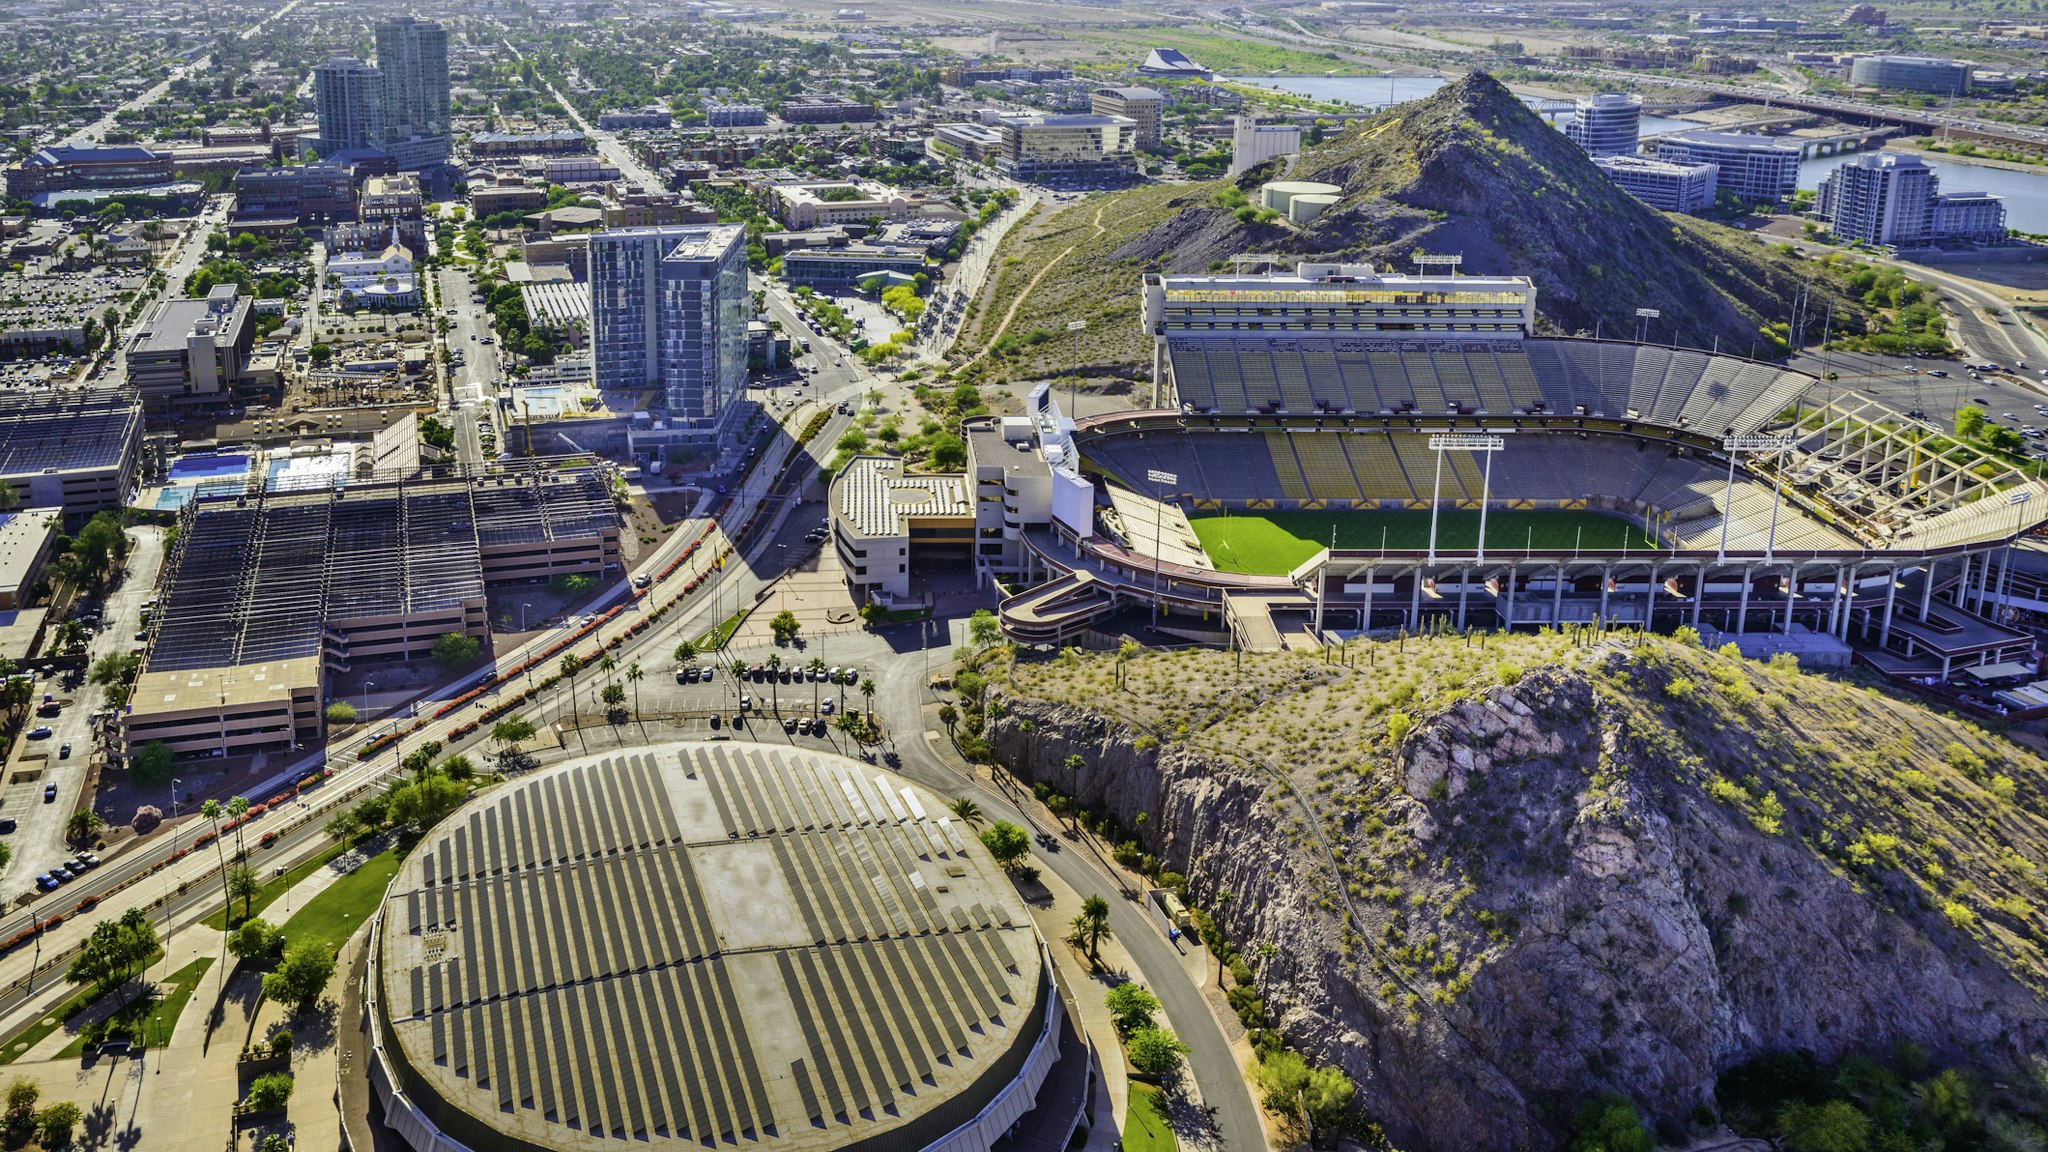 ASU campus Tempe AZ Sun Devil Football Stadium aerial view - stock photo